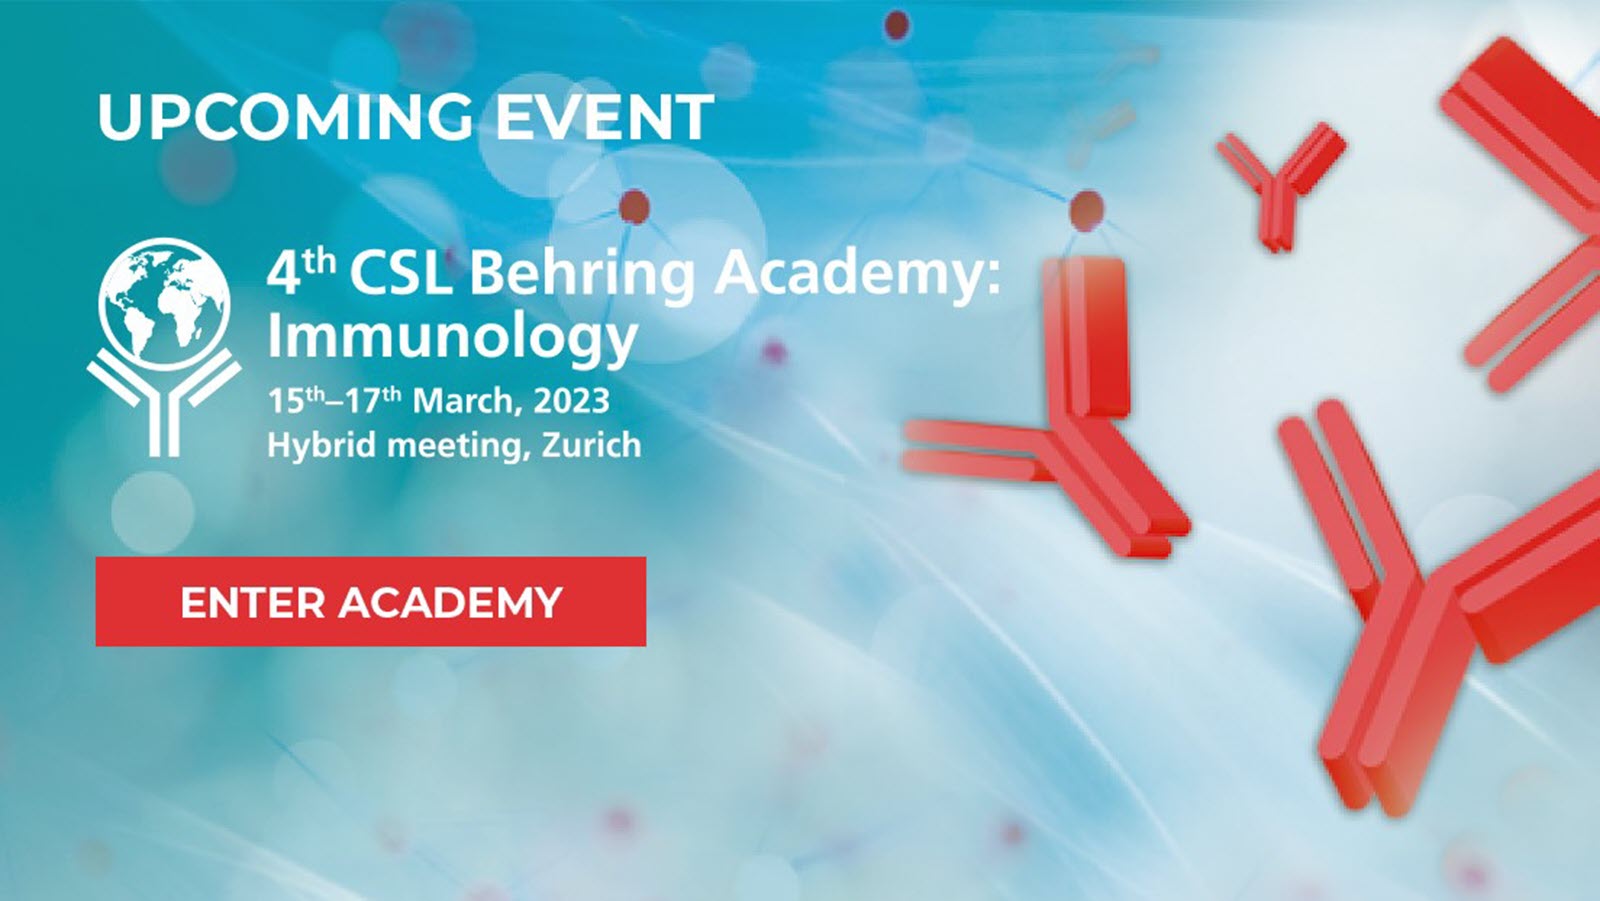 CSL Behring Academy